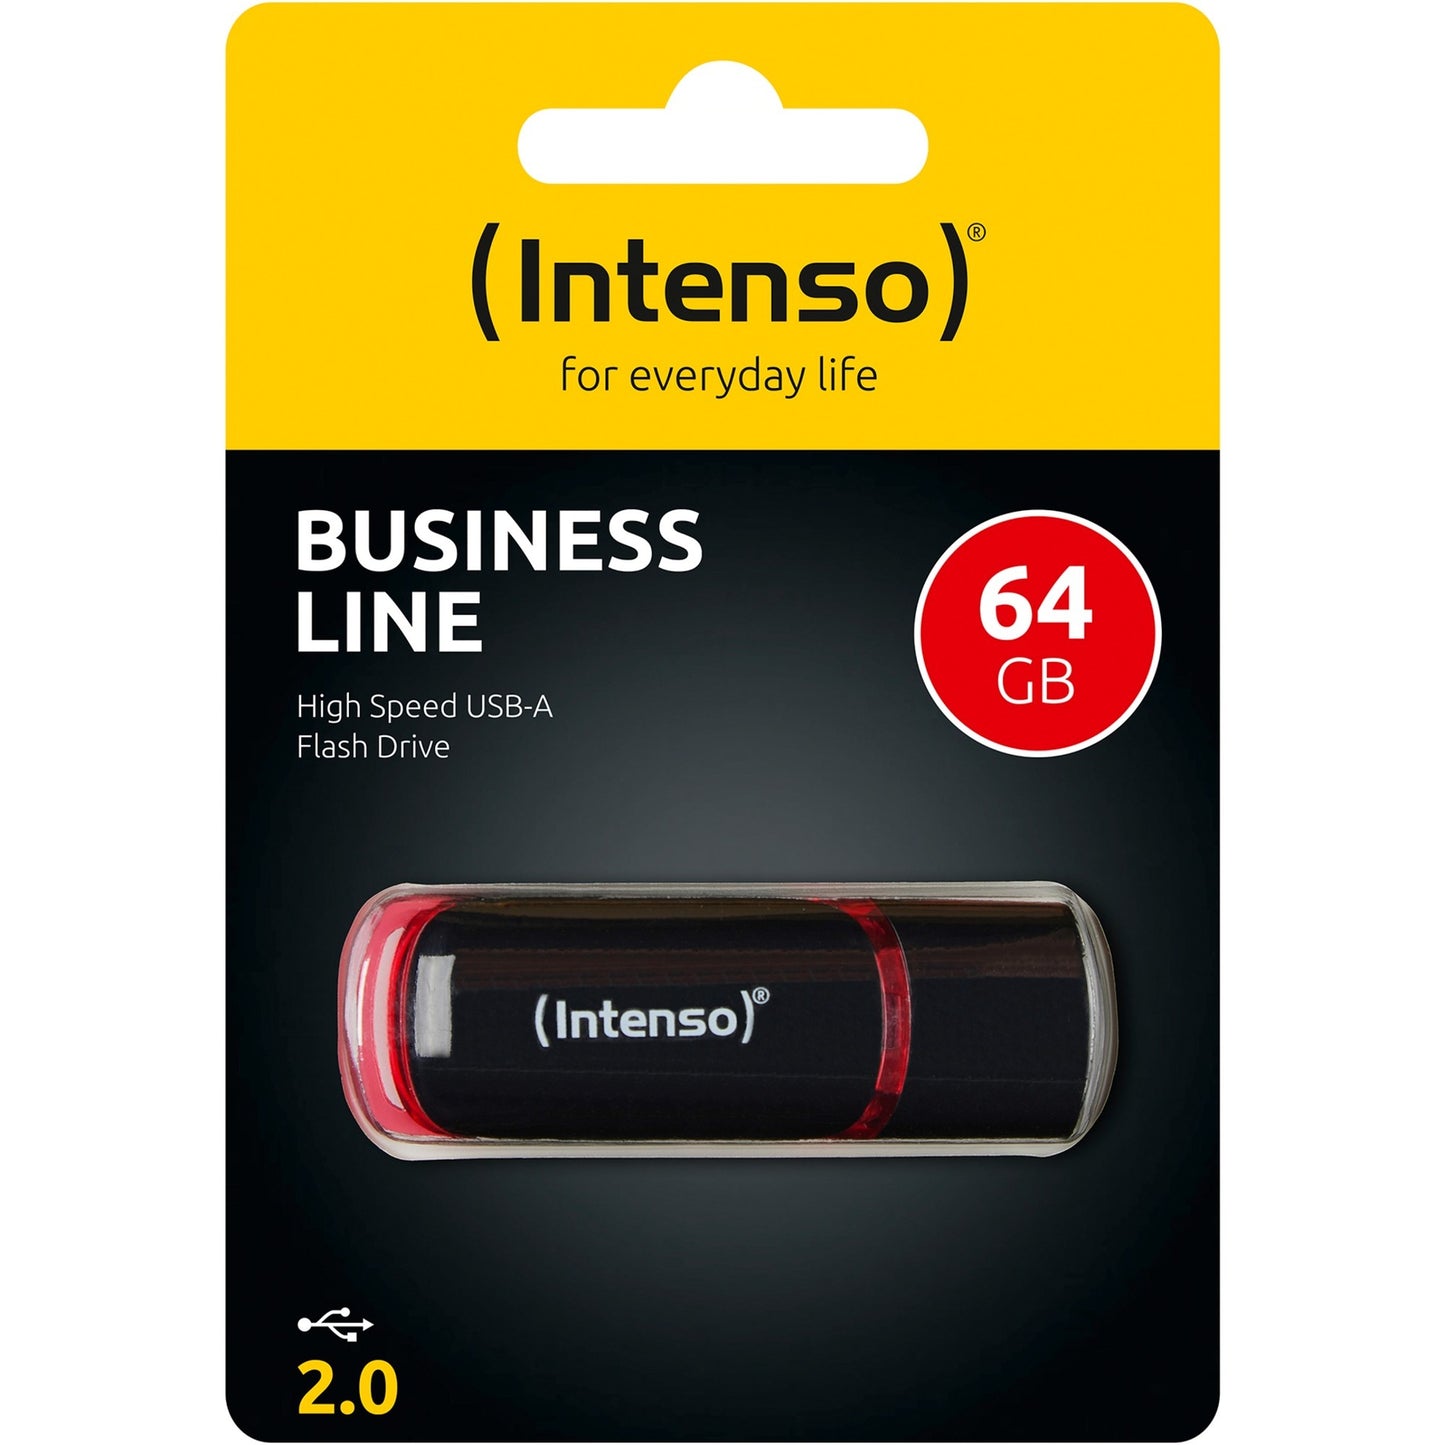 INTENSO NEGOCIO LÍNEA 64 GB USB 2.0